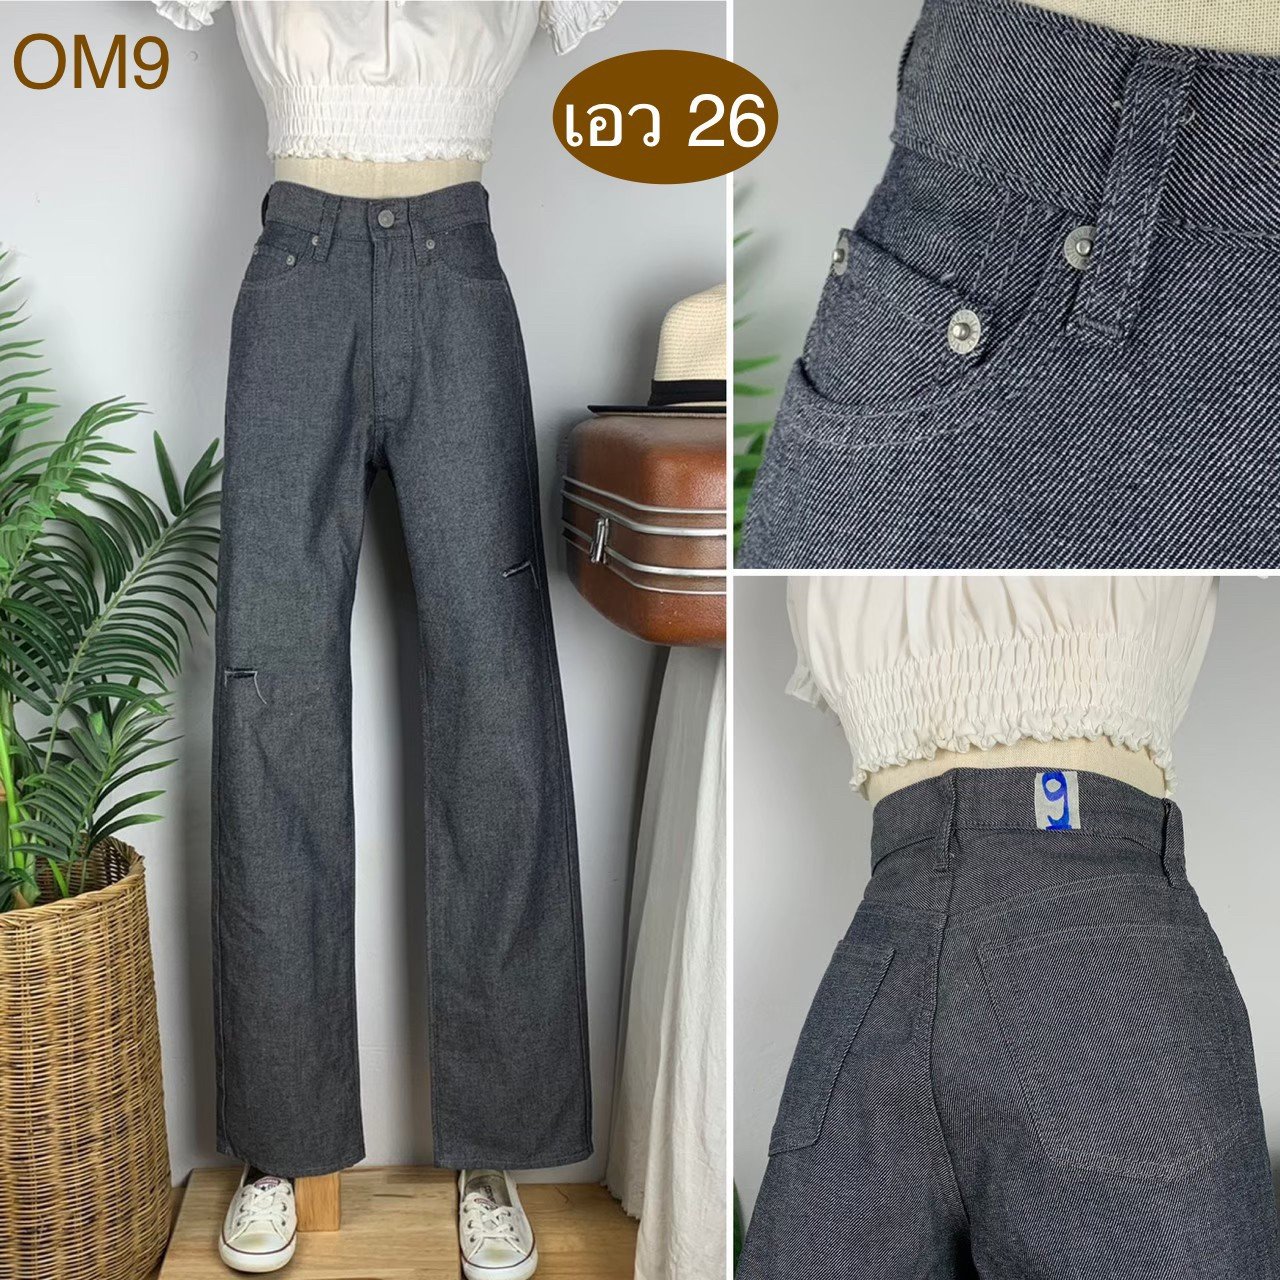 ♥️ รหัสOM9 ▪️ป้าย World Jeans  ▪️ เอว 26" สะโพก 36" ต้นขา 22" ▪️เป้า 10.5" ยาว 43" (นิ้ว)